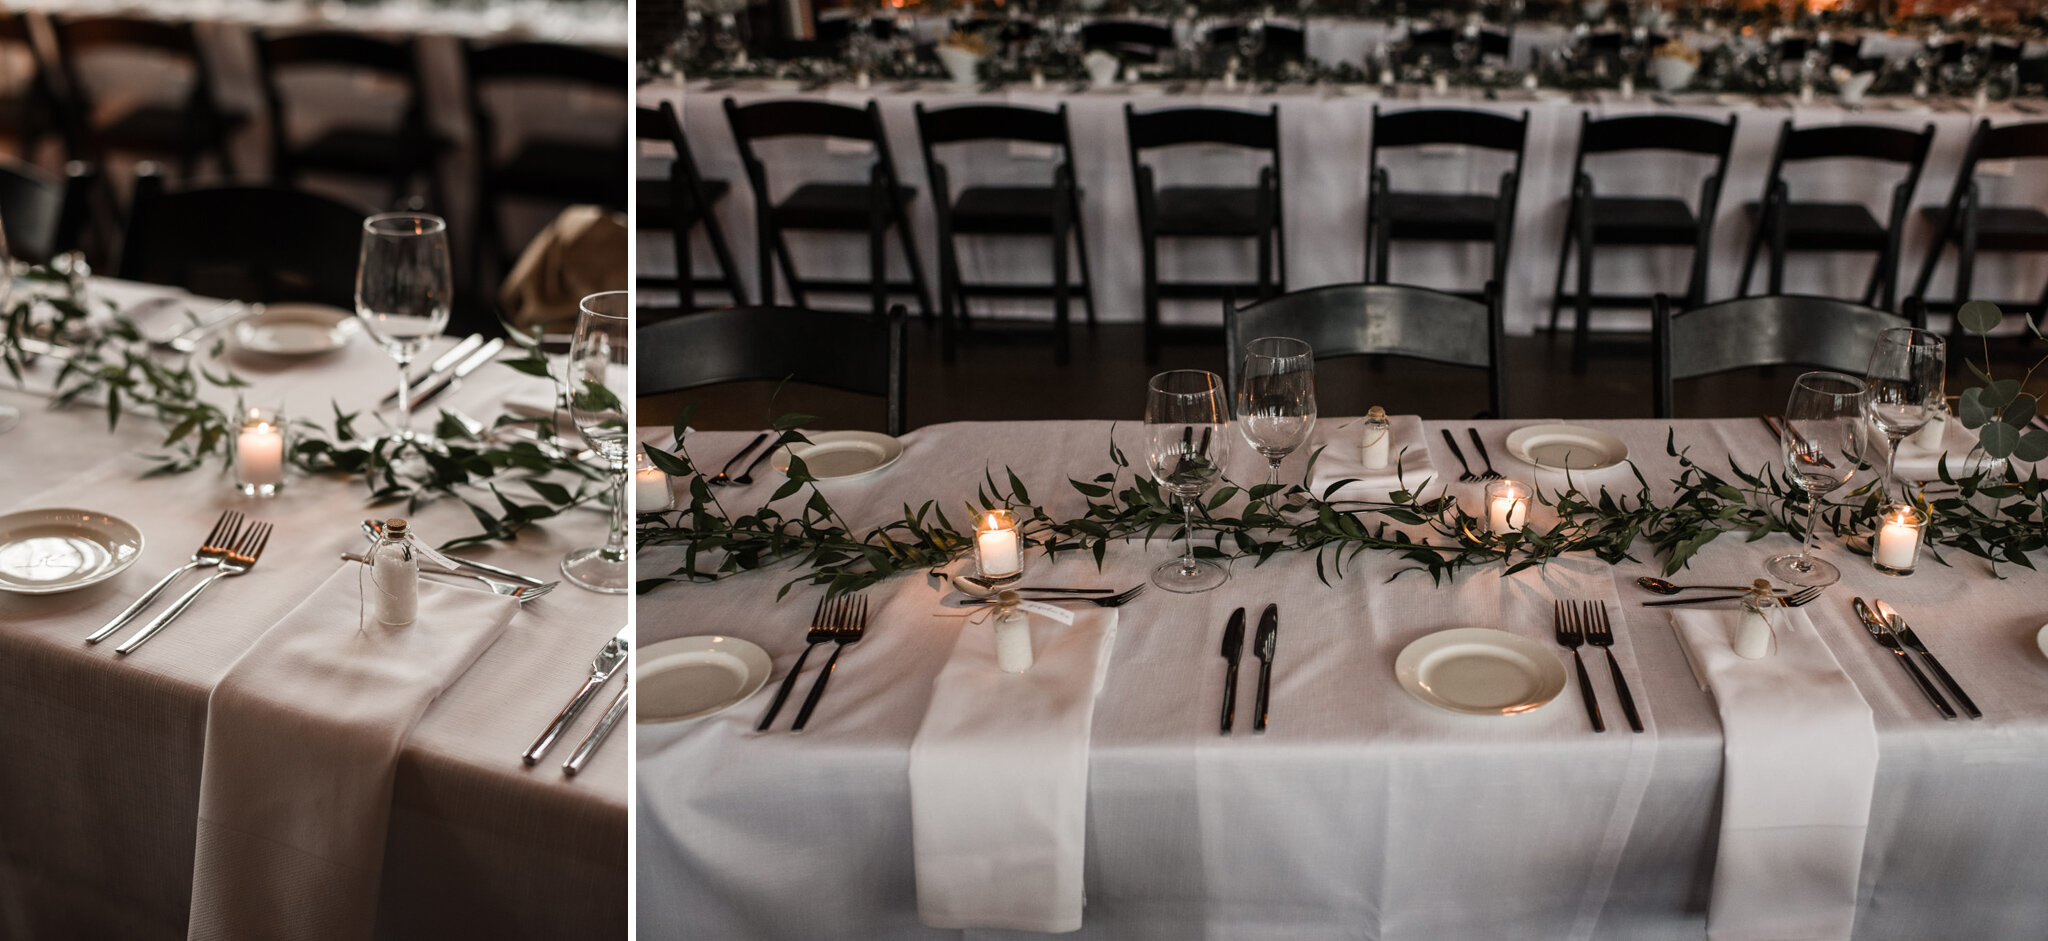 155-steamwhistle-wedding-reception-ceremony-decor-inspiration-greenery-candles-toronto-photos.jpg